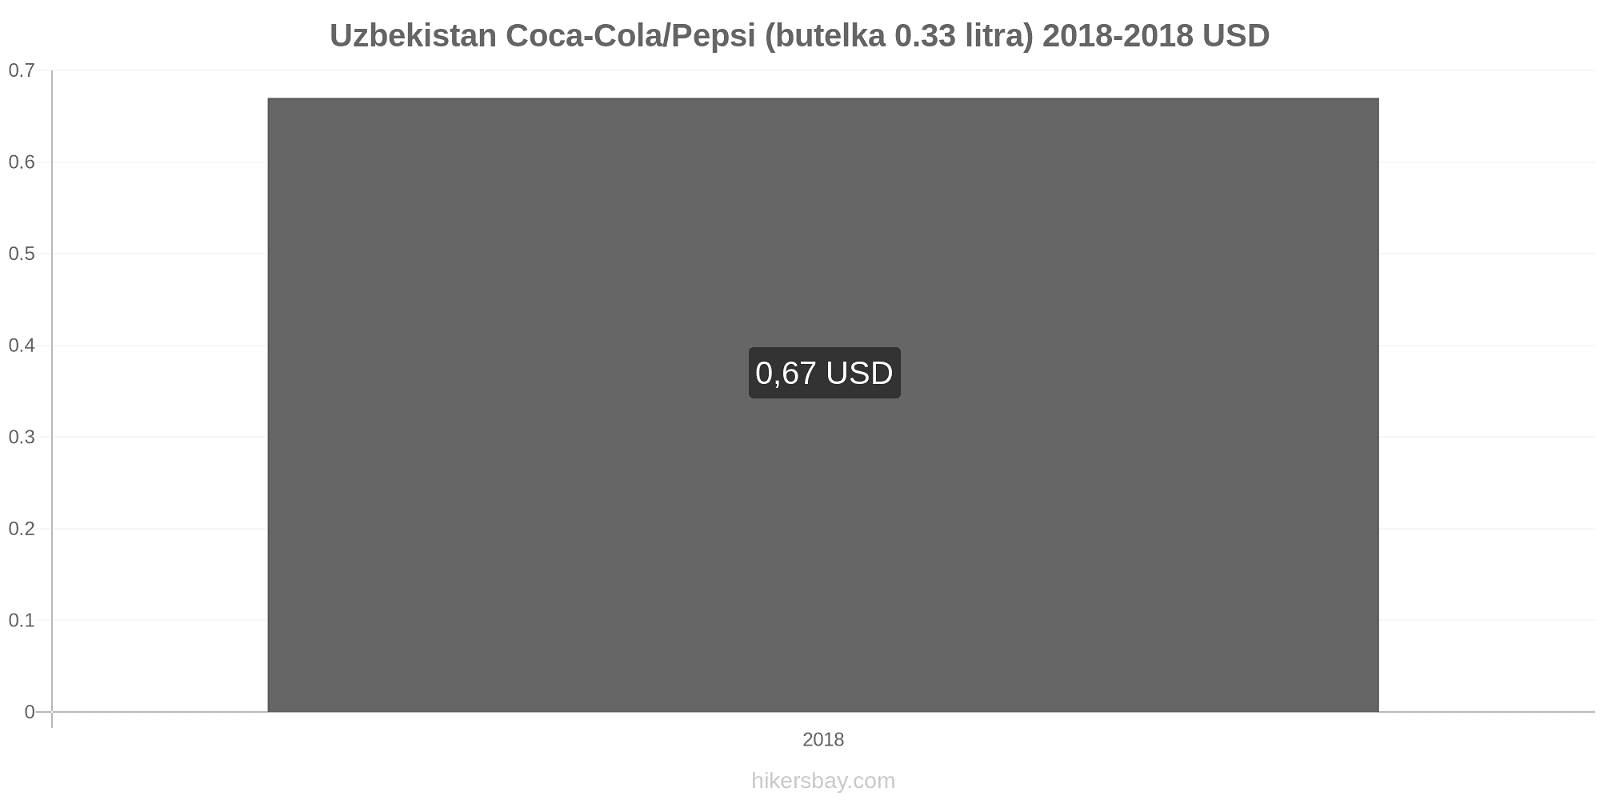 Uzbekistan zmiany cen Coca-Cola/Pepsi (butelka 0.33 litra) hikersbay.com